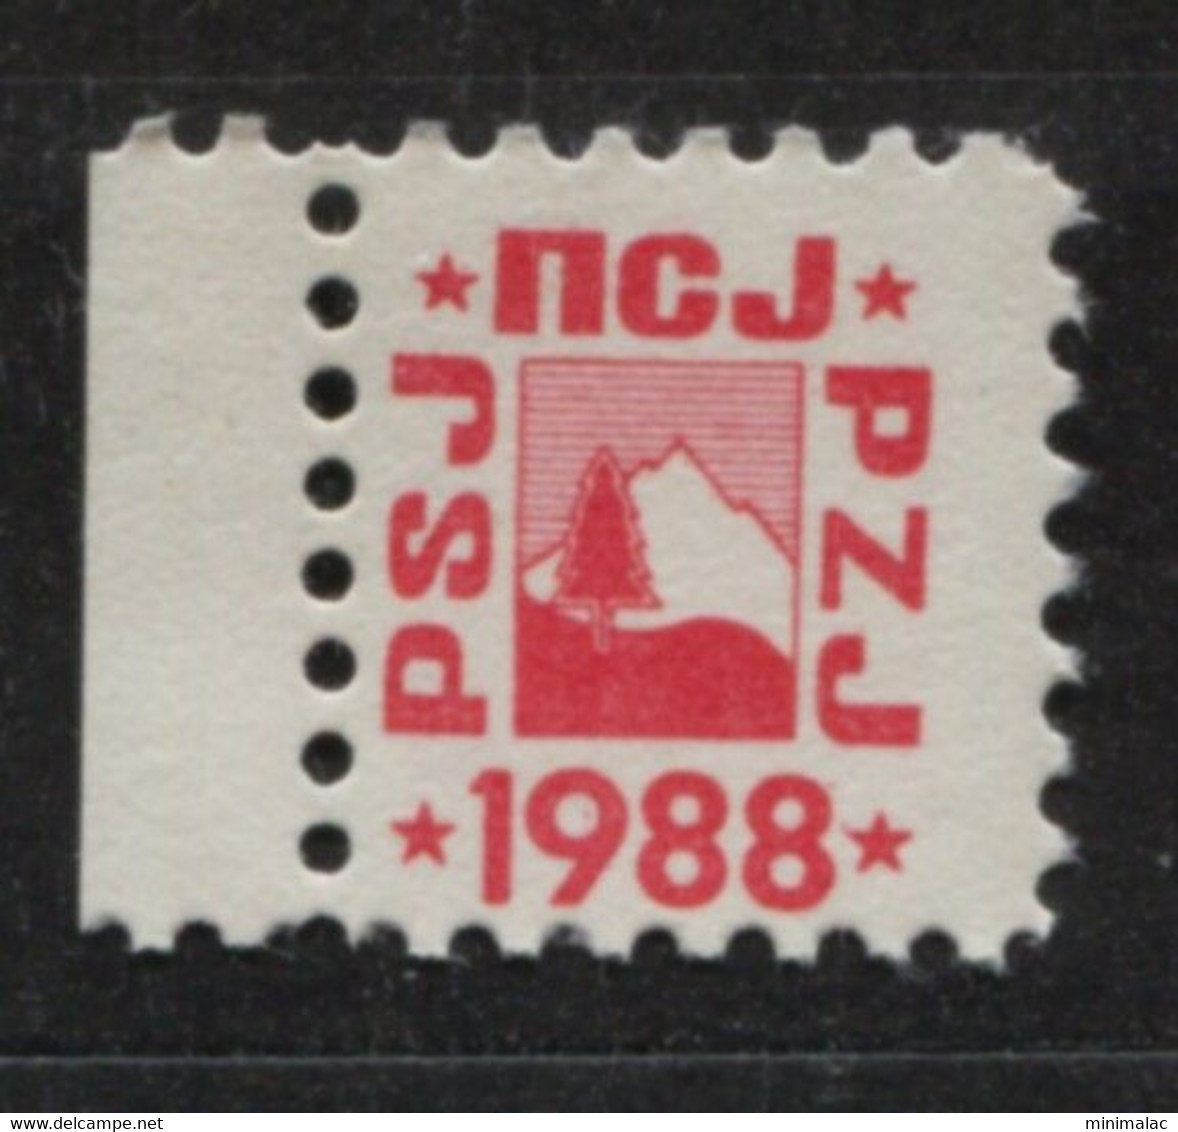 Yugoslavia 1988, Stamp For Membership Mountaineering Association Of Yugoslavia, Revenue, Tax Stamp, Cinderella, Red - Dienstmarken